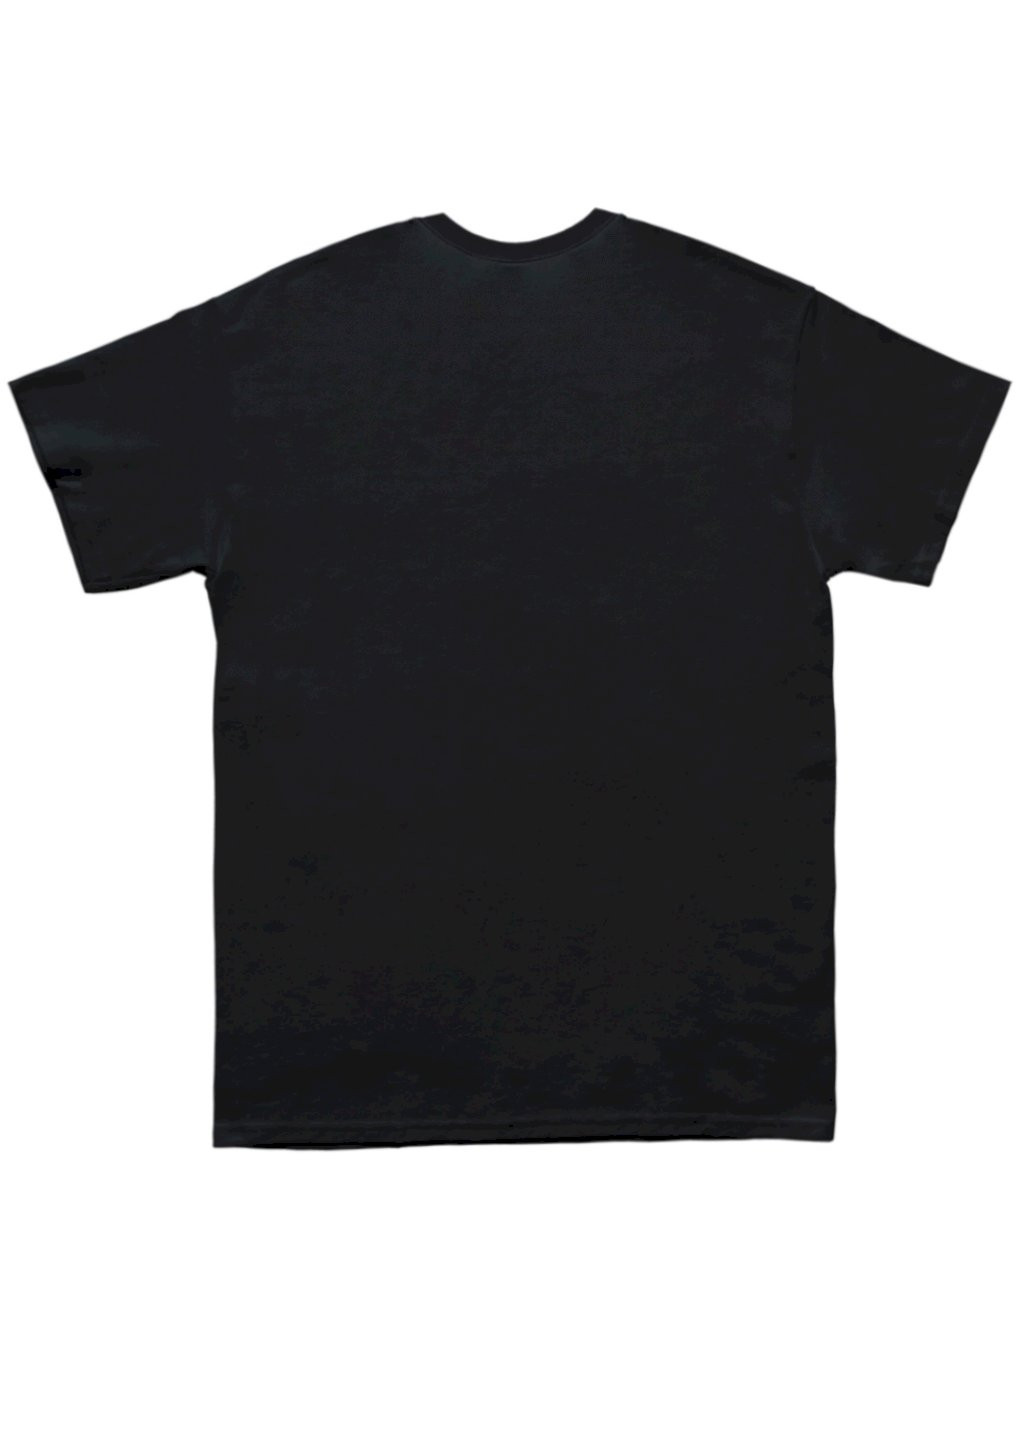 Черная футболка мужская черная "парад планет" Trace of Space